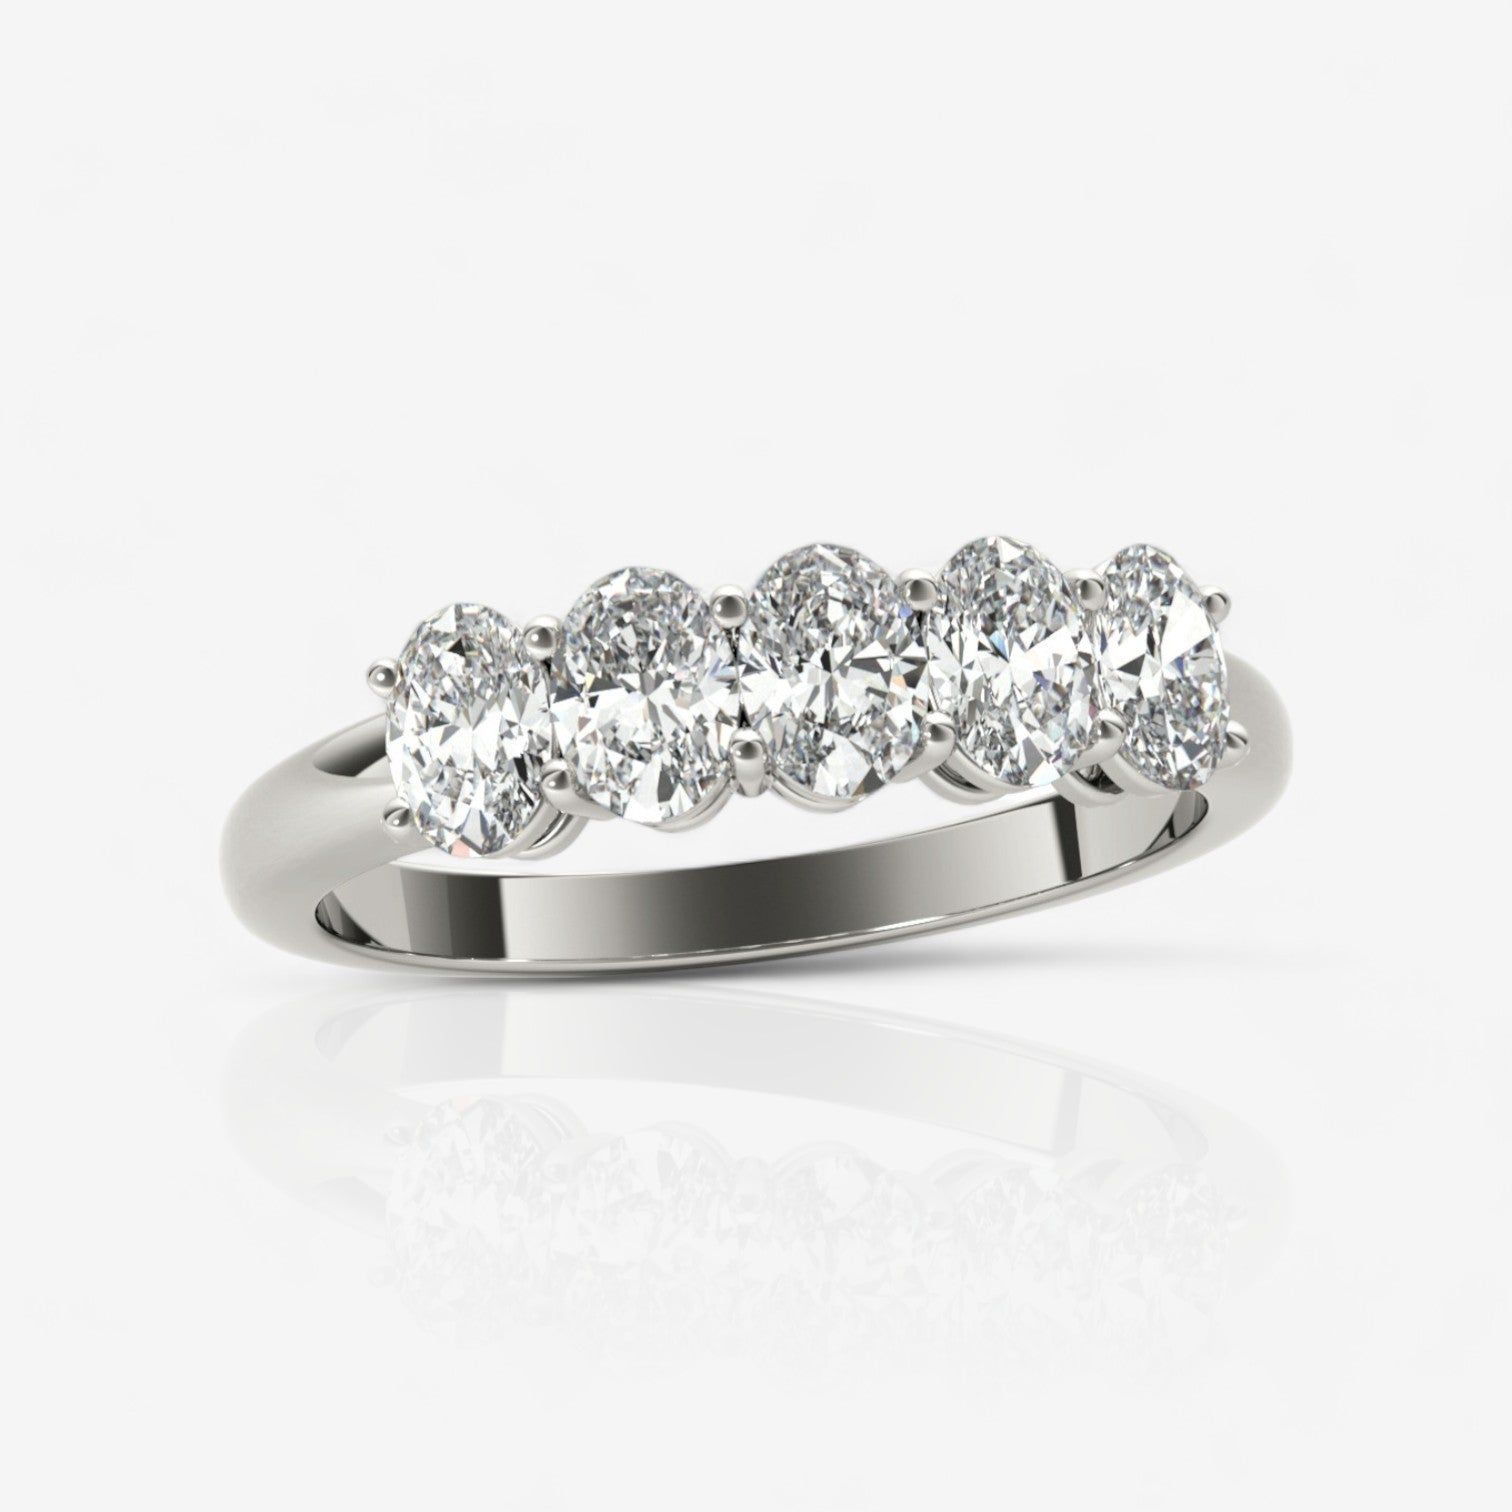 Five-Stone Oval Cut Diamond Wedding Ring